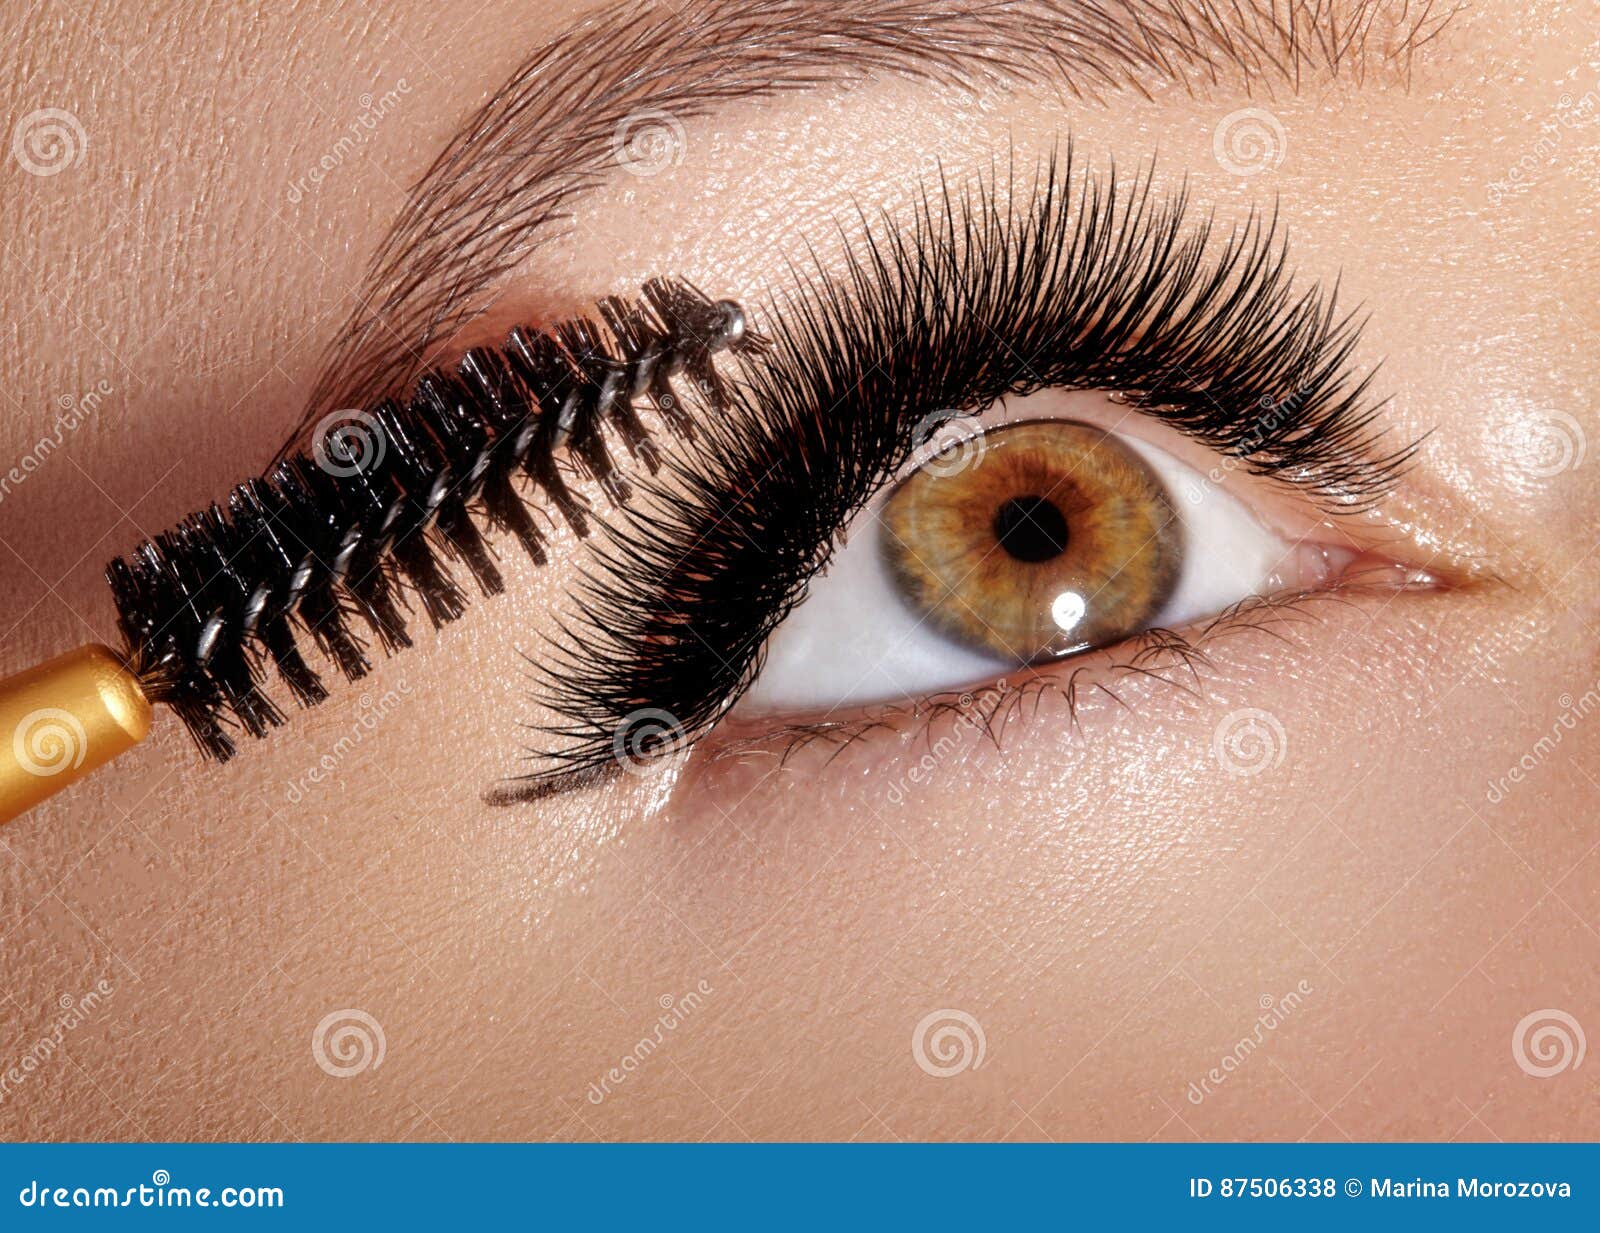 fashion woman applying eyeshadow, mascara on eyelid, eyelash and eyebrow using makeup brush. professional make-up artist